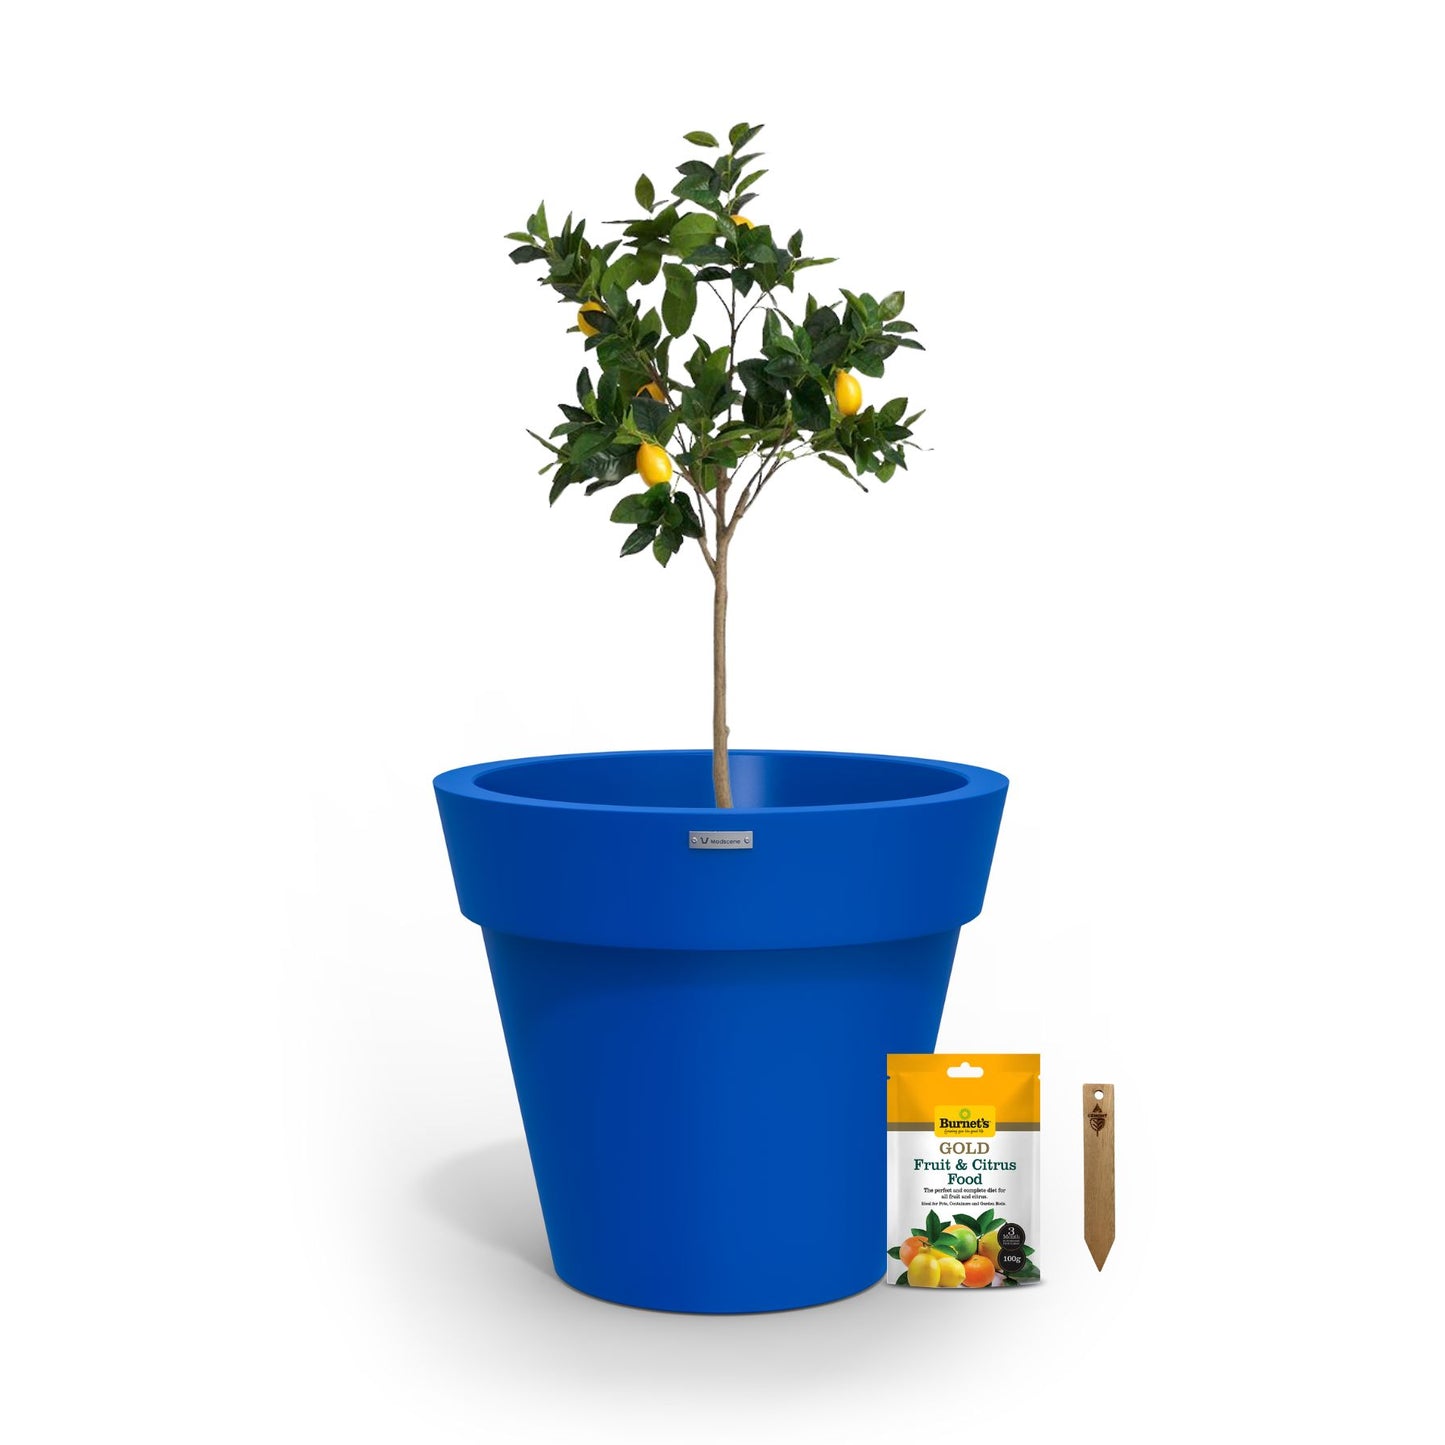 A lemon tree in a dark blue planter pot.